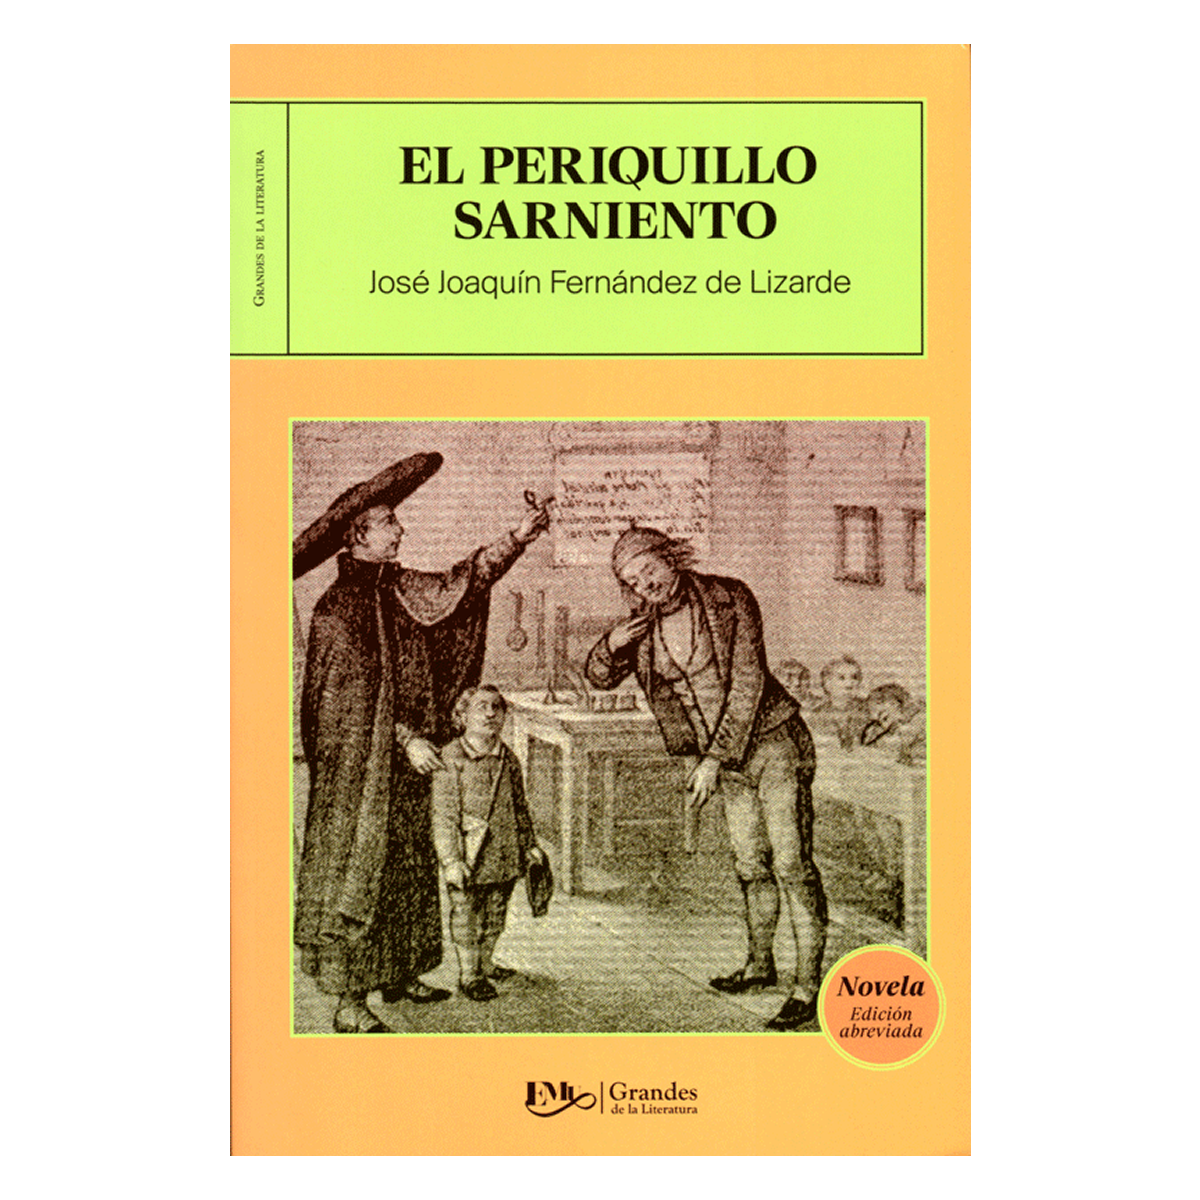 Periquillo sarniento (El) Libro Jose Joaquin Fernandez de Lizardi Grandes de la literatura Integra